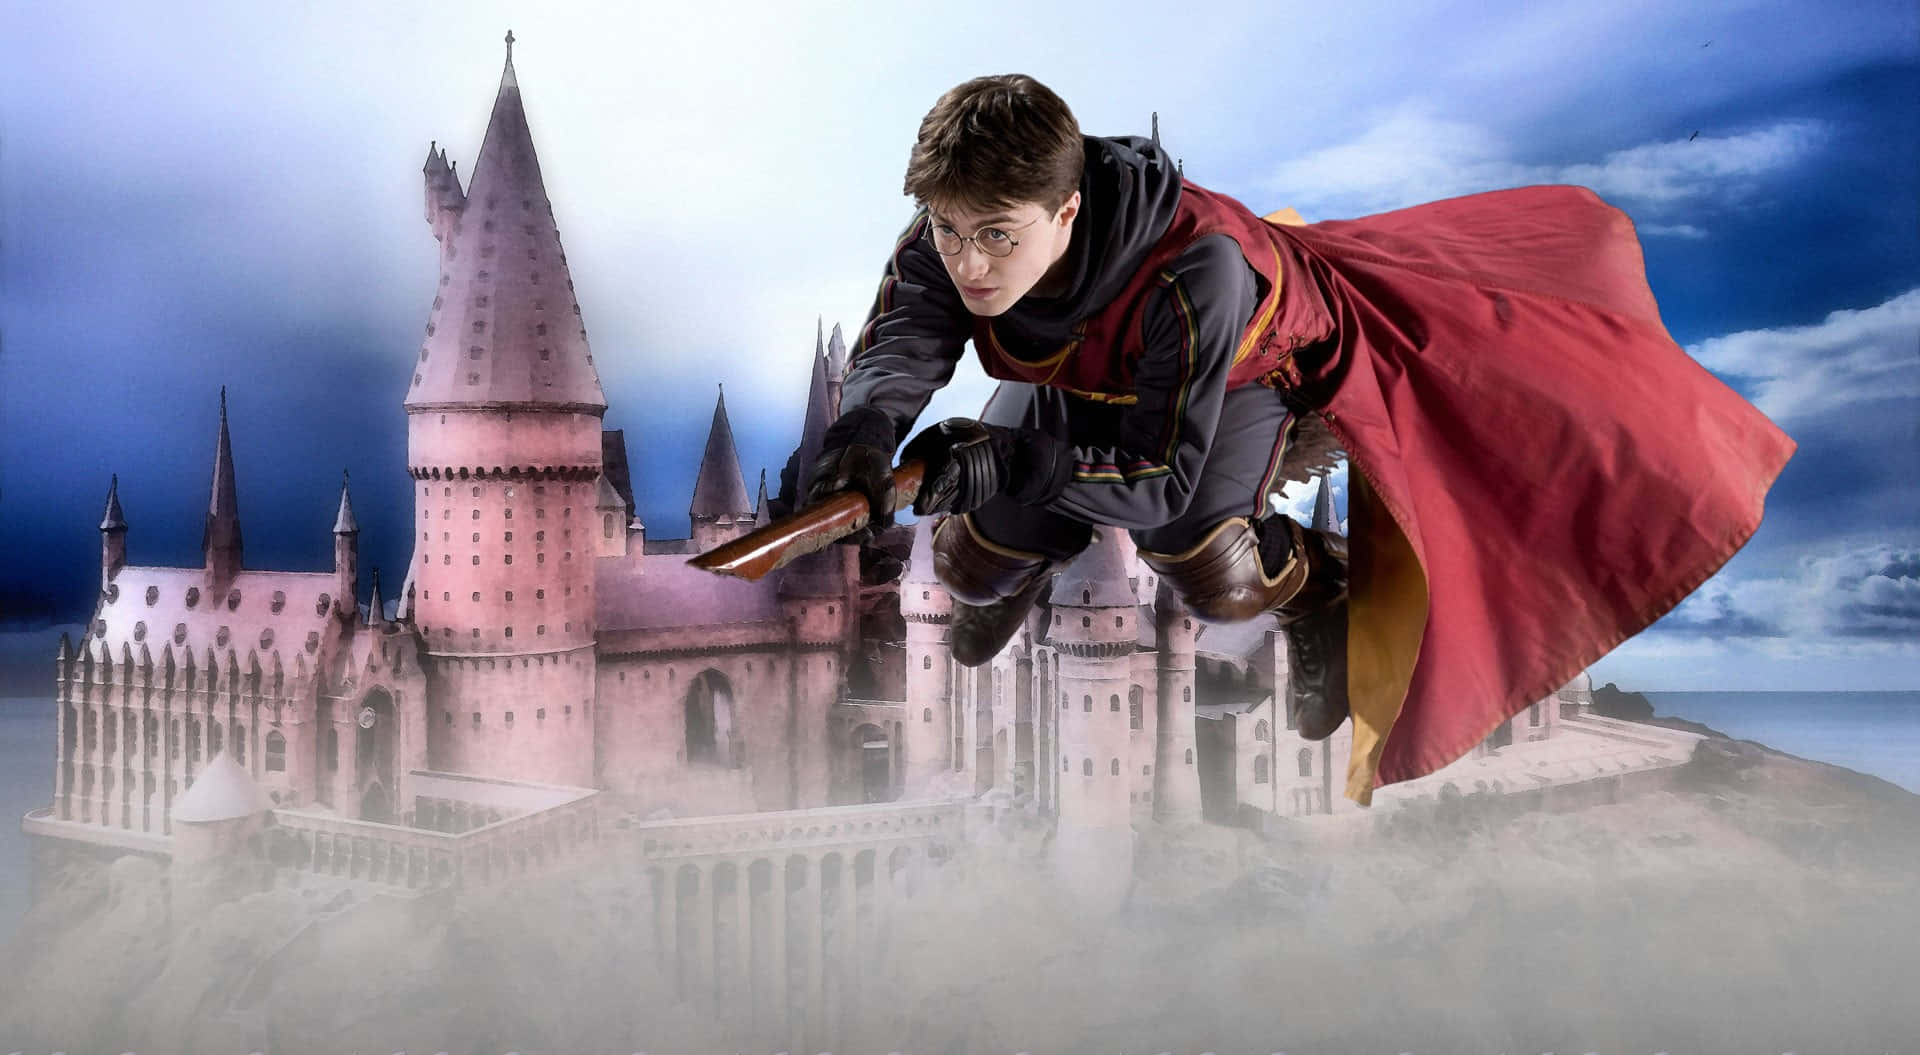 Harrypotter-landskap Hogwarts-slottet. Wallpaper